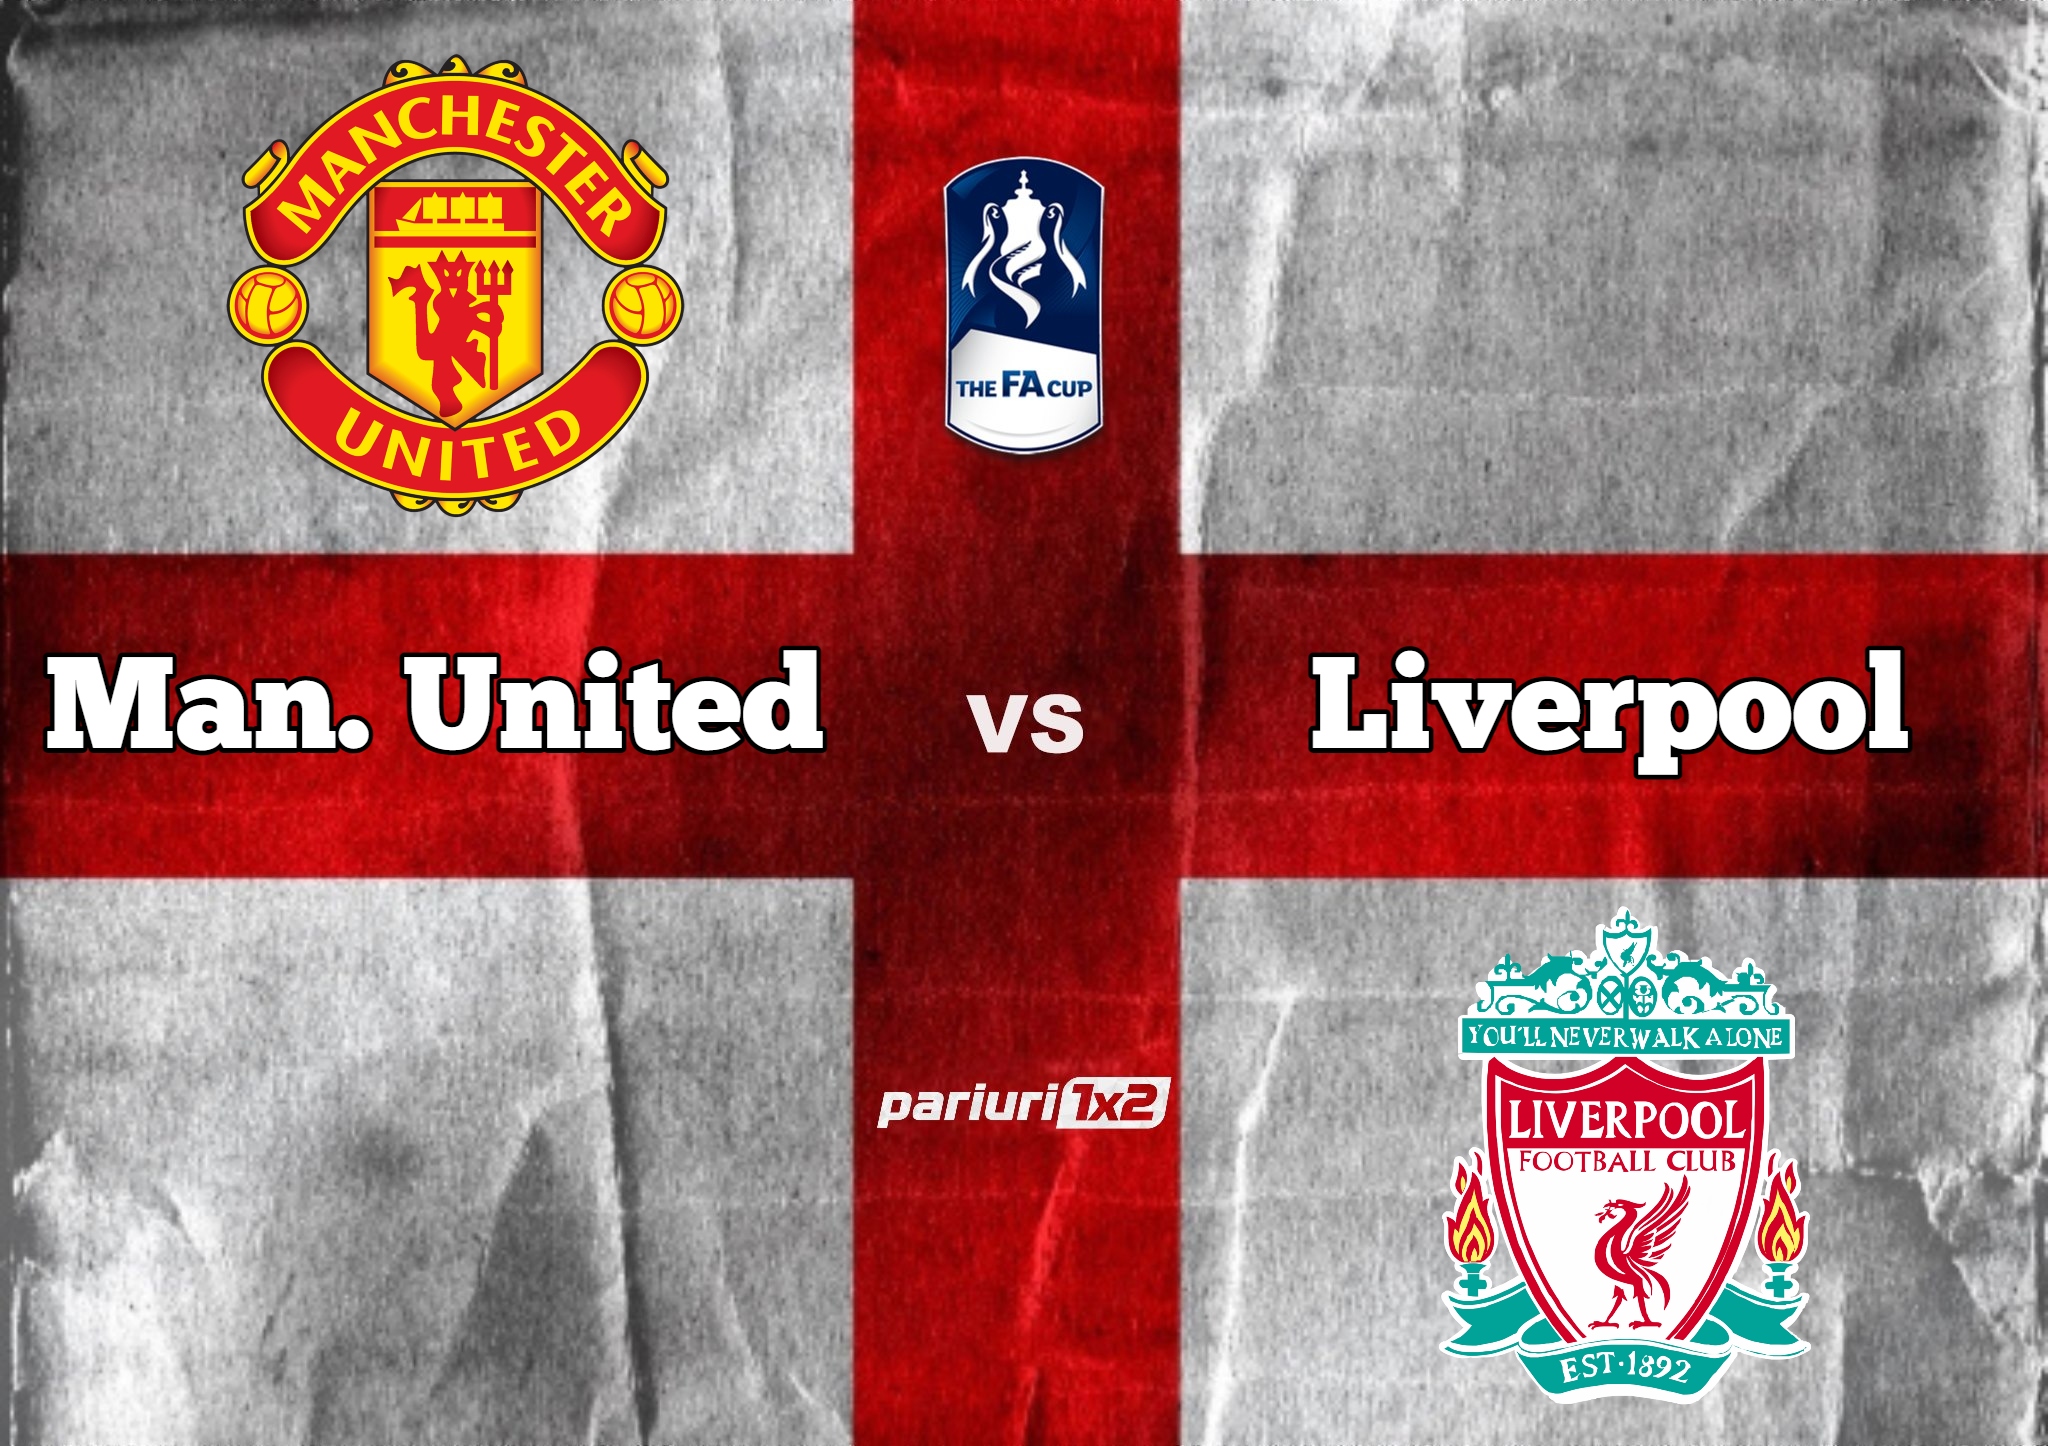 Man. United - Liverpool 2